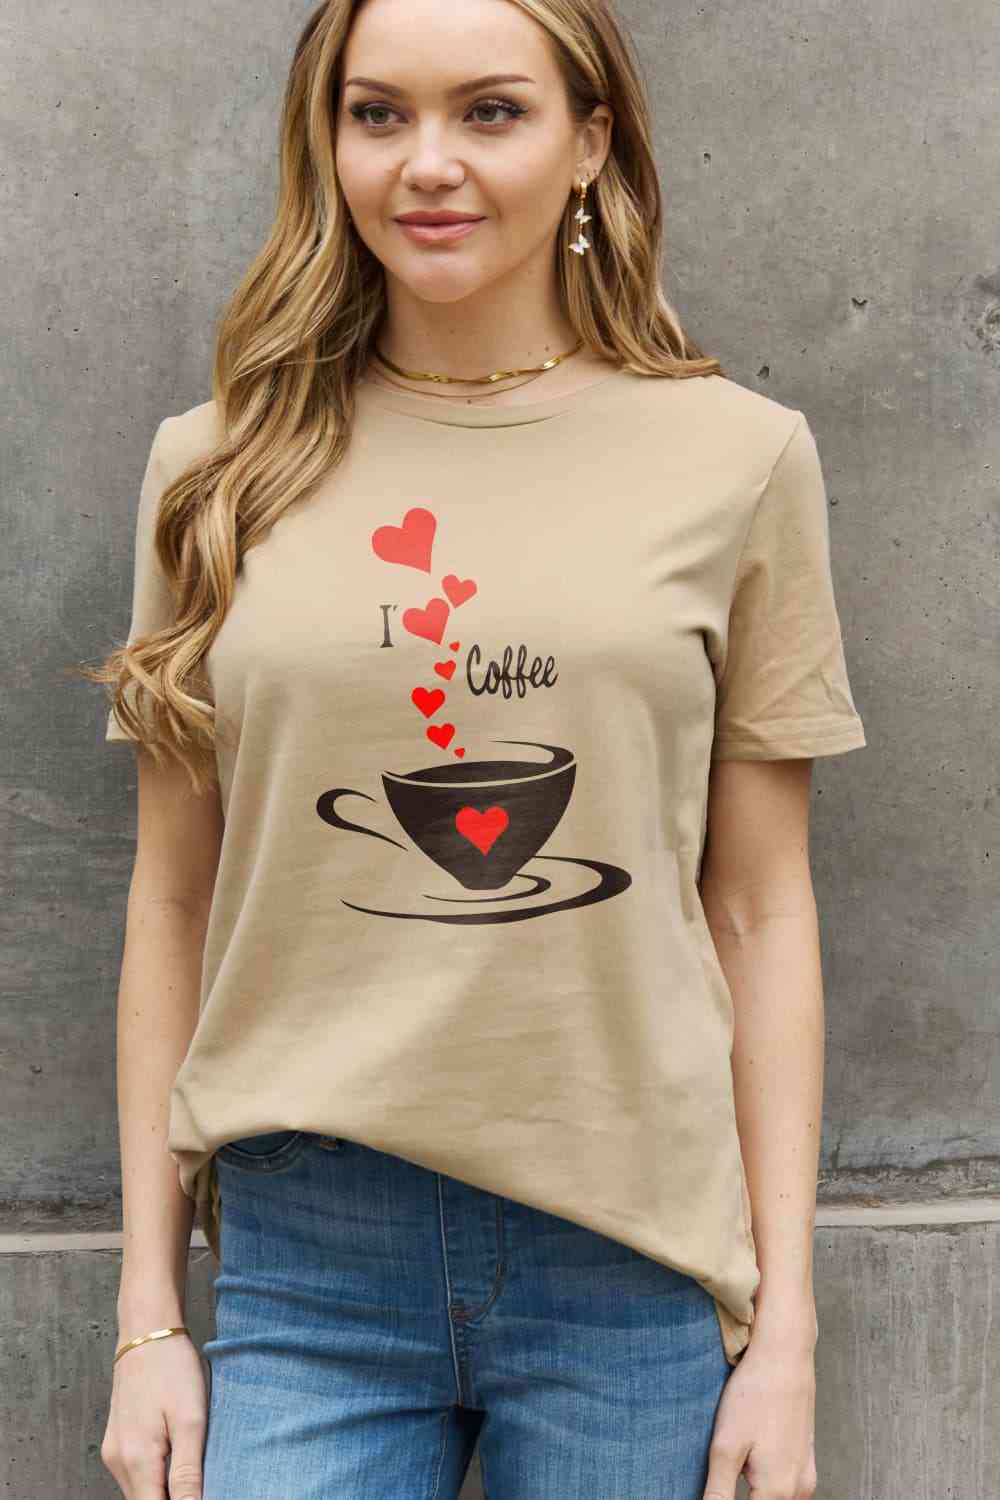 I LOVE COFFEE Graphic Cotton Tee - T-Shirts - Shirts & Tops - 11 - 2024